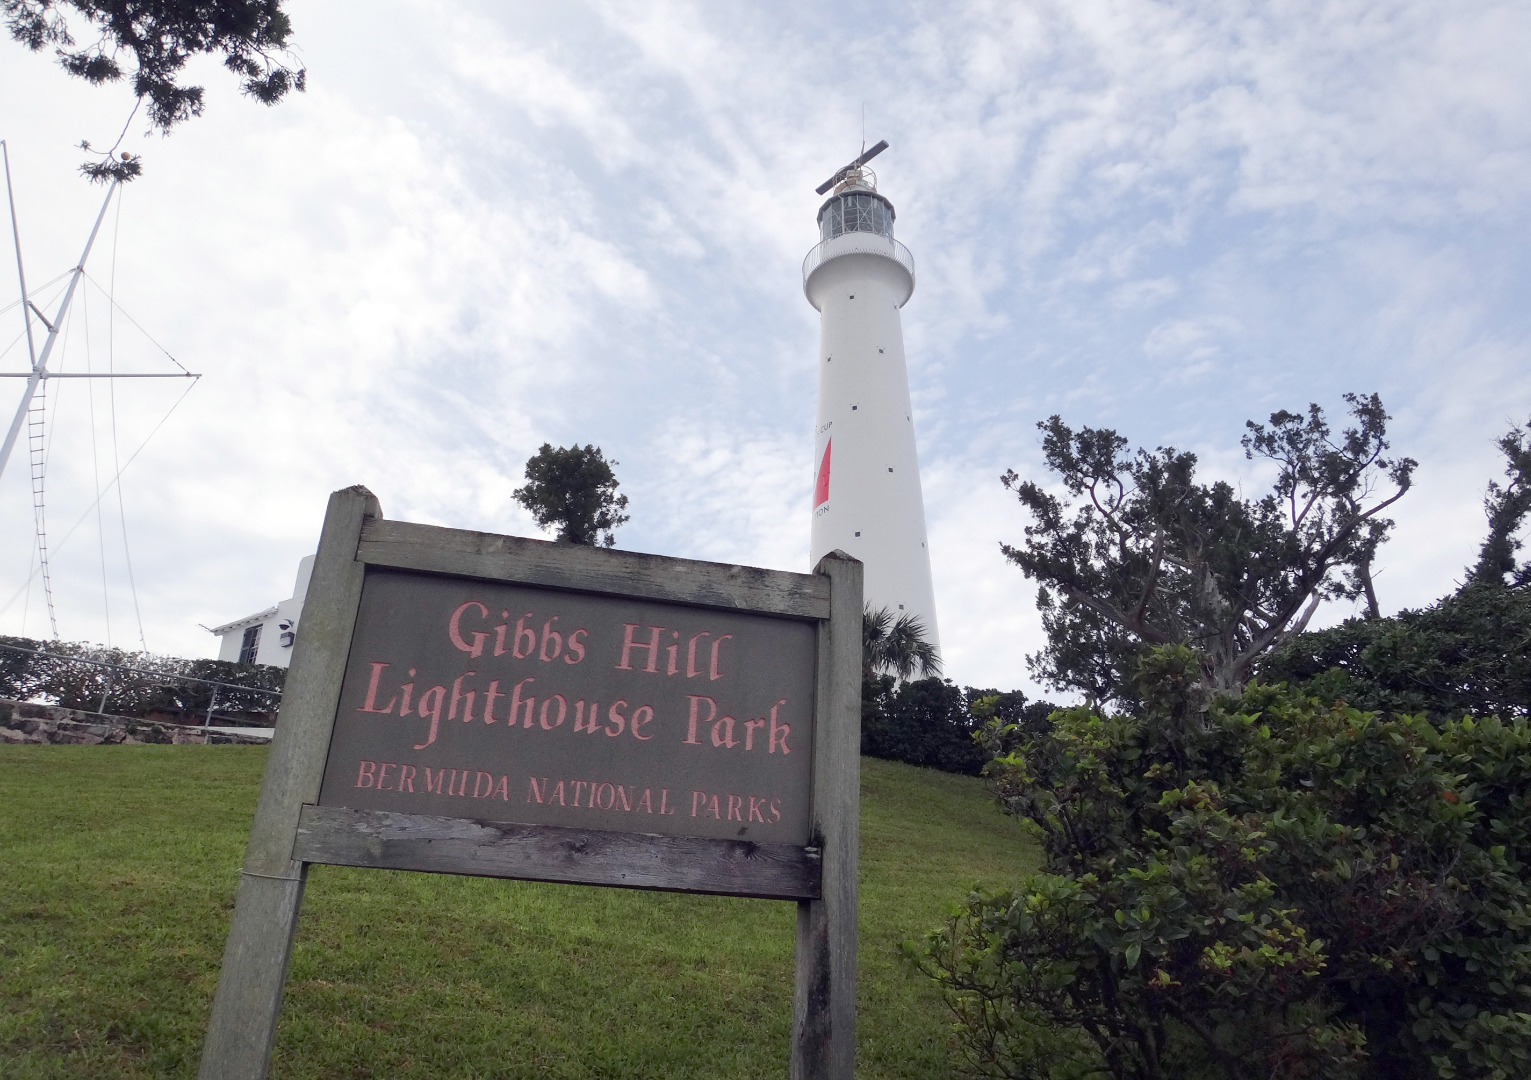 Gibbs Hill Lighthouse Park